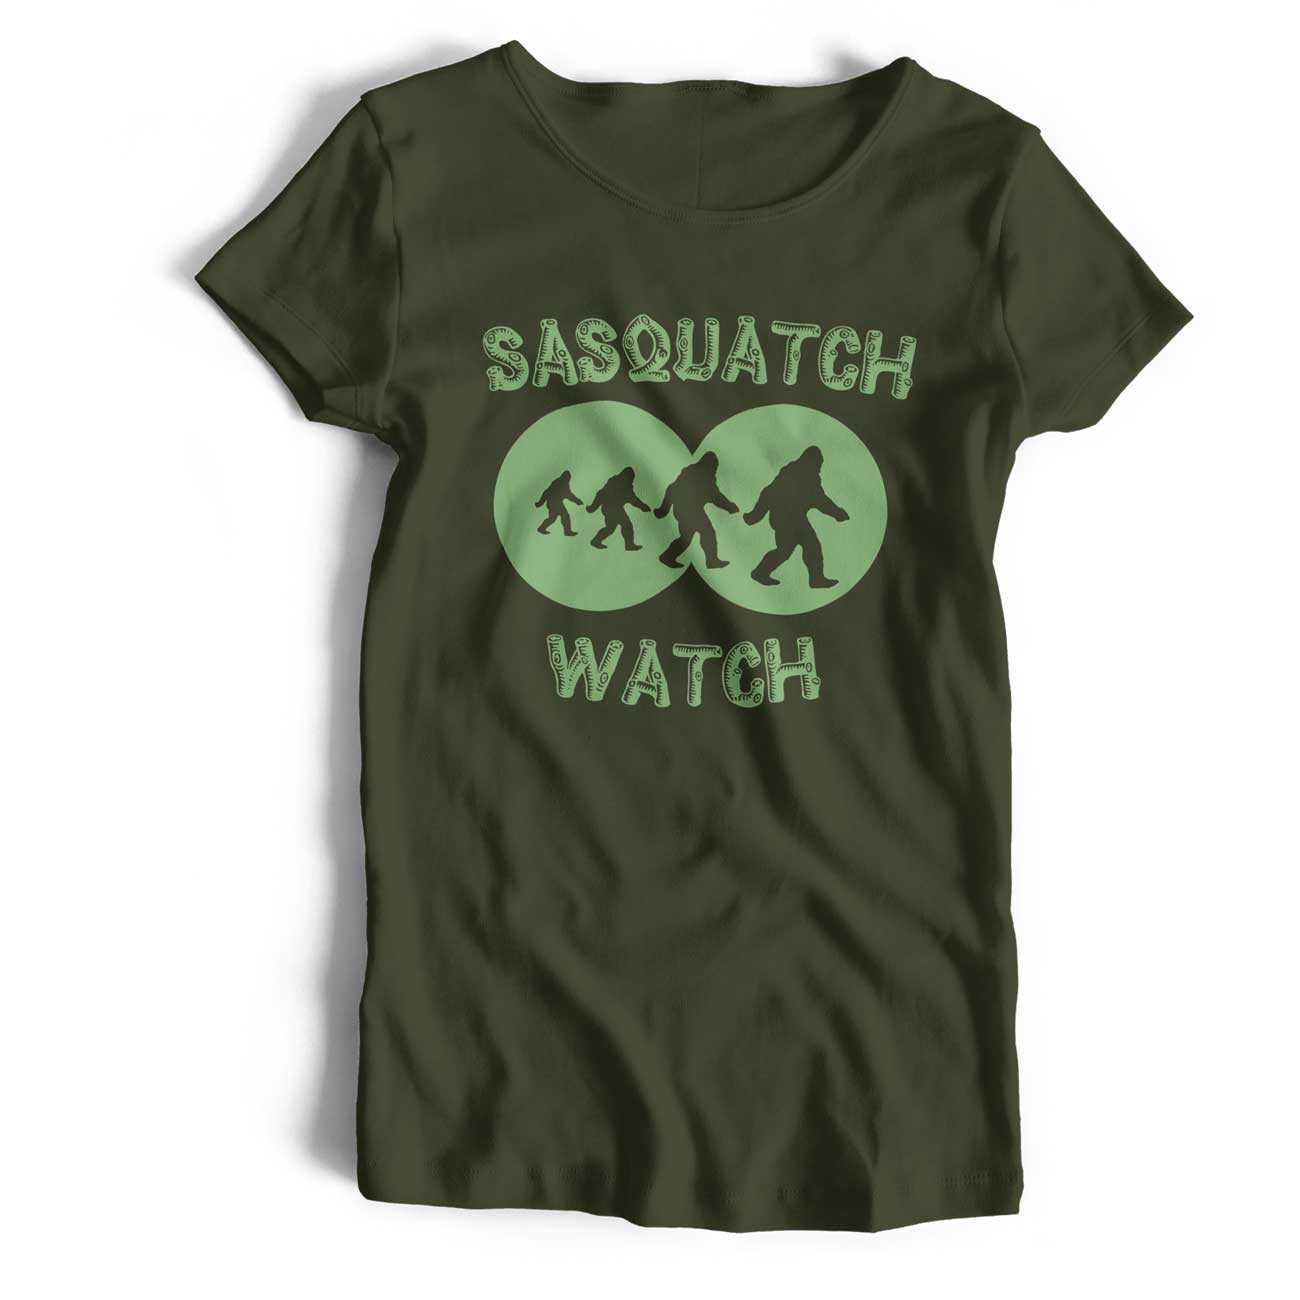 Old Skool Hooligans Sasquatch Watch T Shirt - Bigfoot